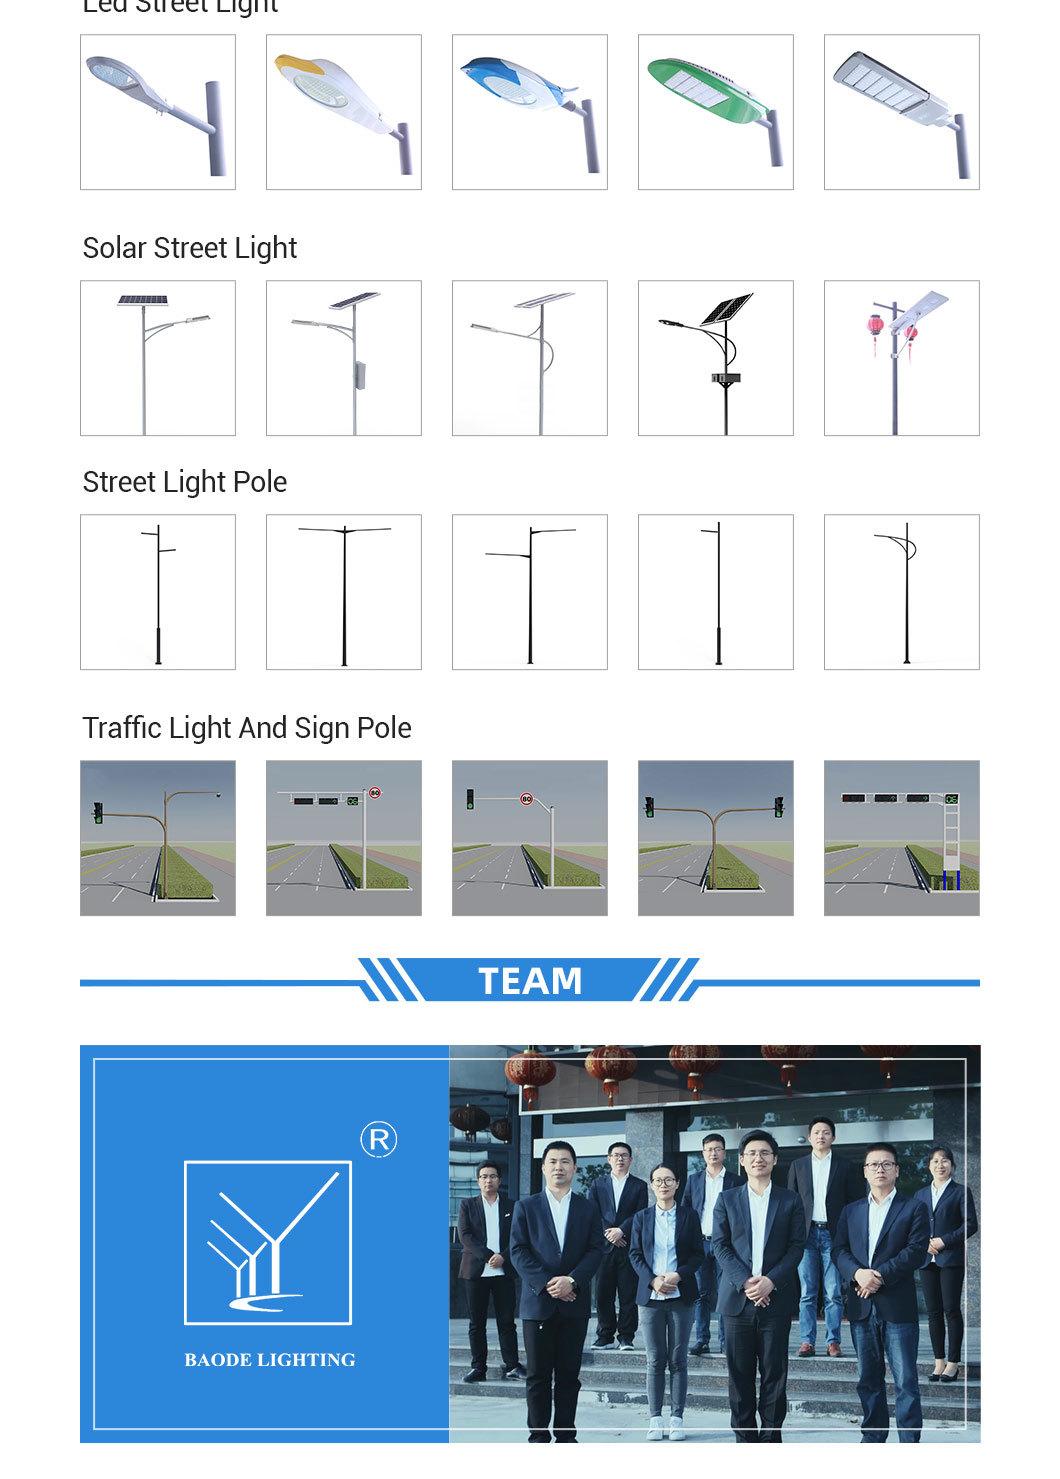 400W 600W 800W 1000W 1500W LED High Mast Flood Light for Outdoor Airport Stadium Lighting